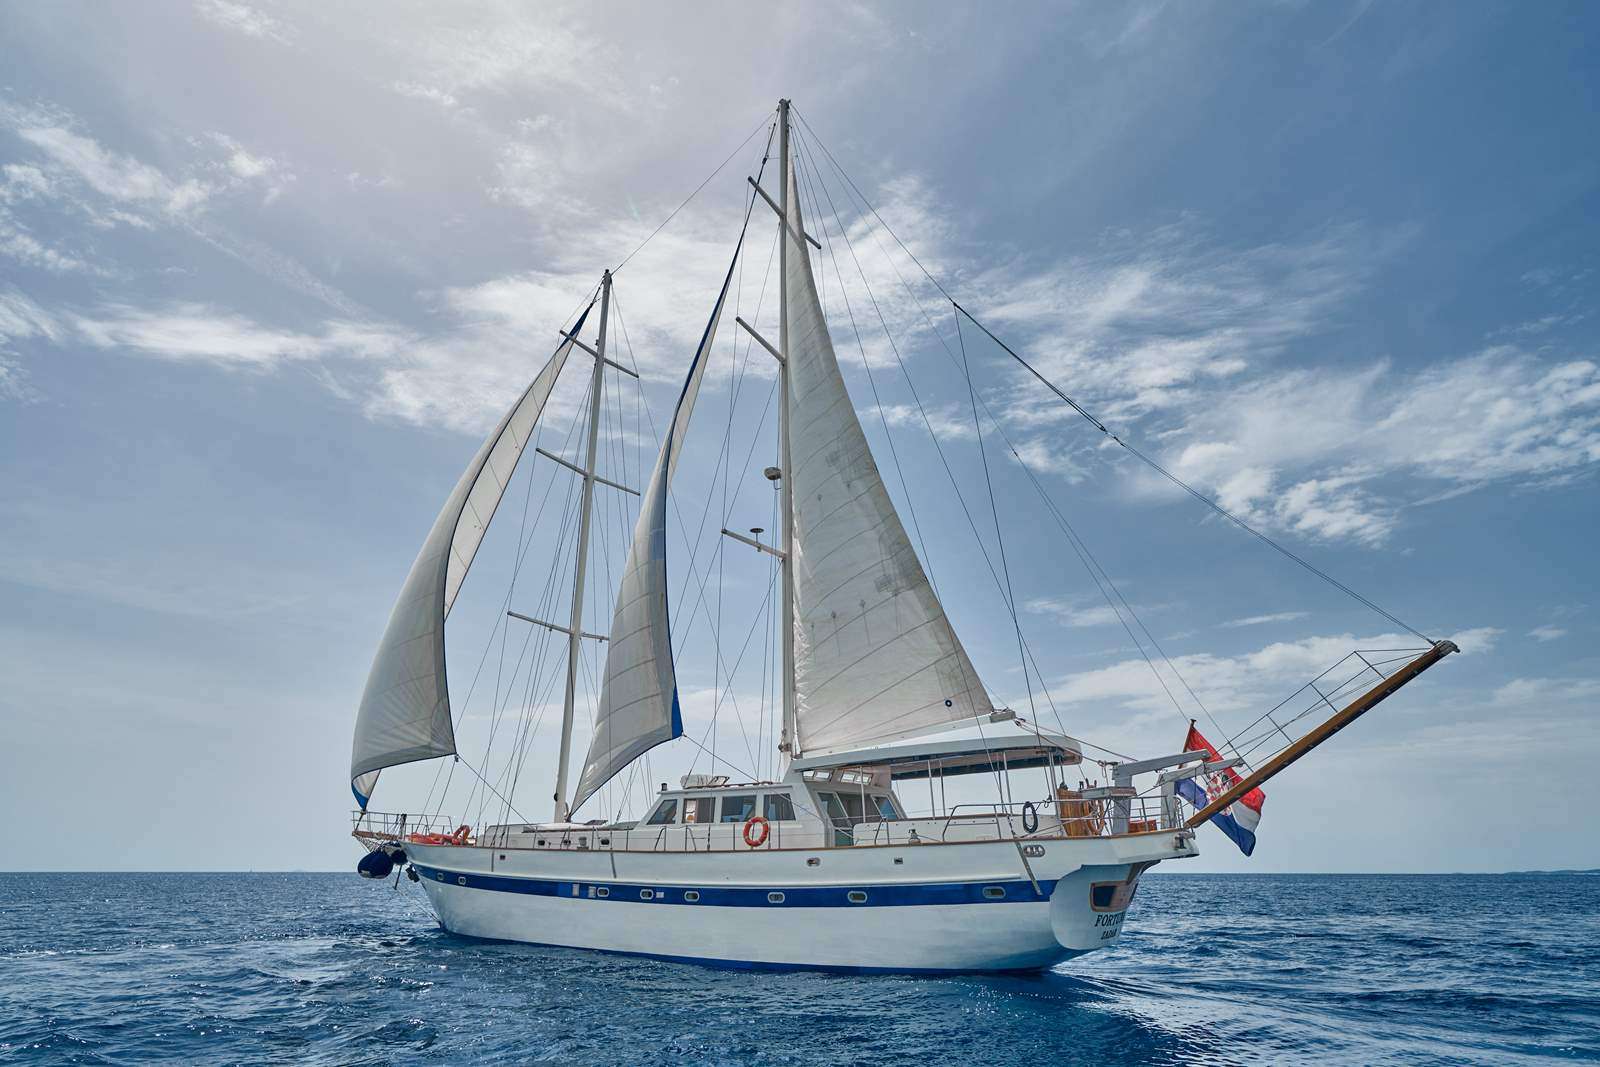 Motor Sailing Yacht 'FORTUNA', 12 PAX, 4 Crew, 108.00 Ft, 33.00 Meters, Built 1994, Aegean Build, Refit Year 2014